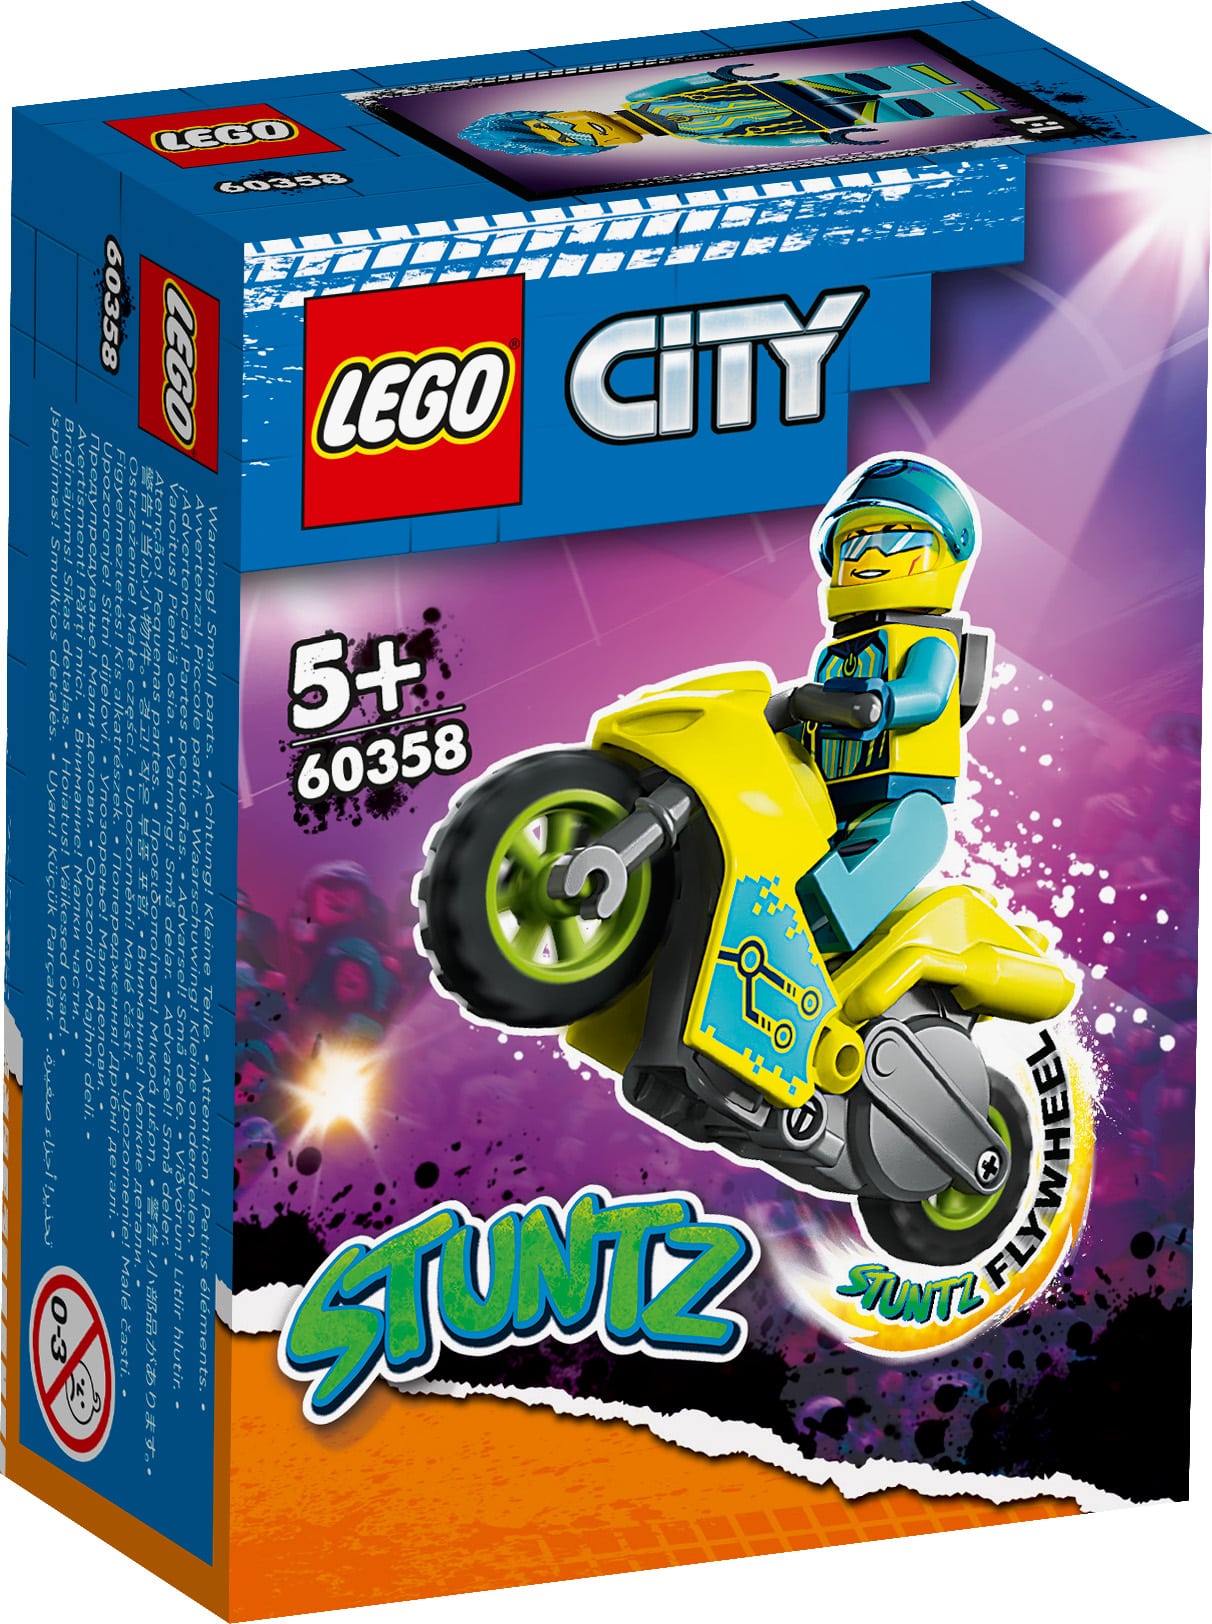 LEGO City 60358 Cyber Stuntbike (2)